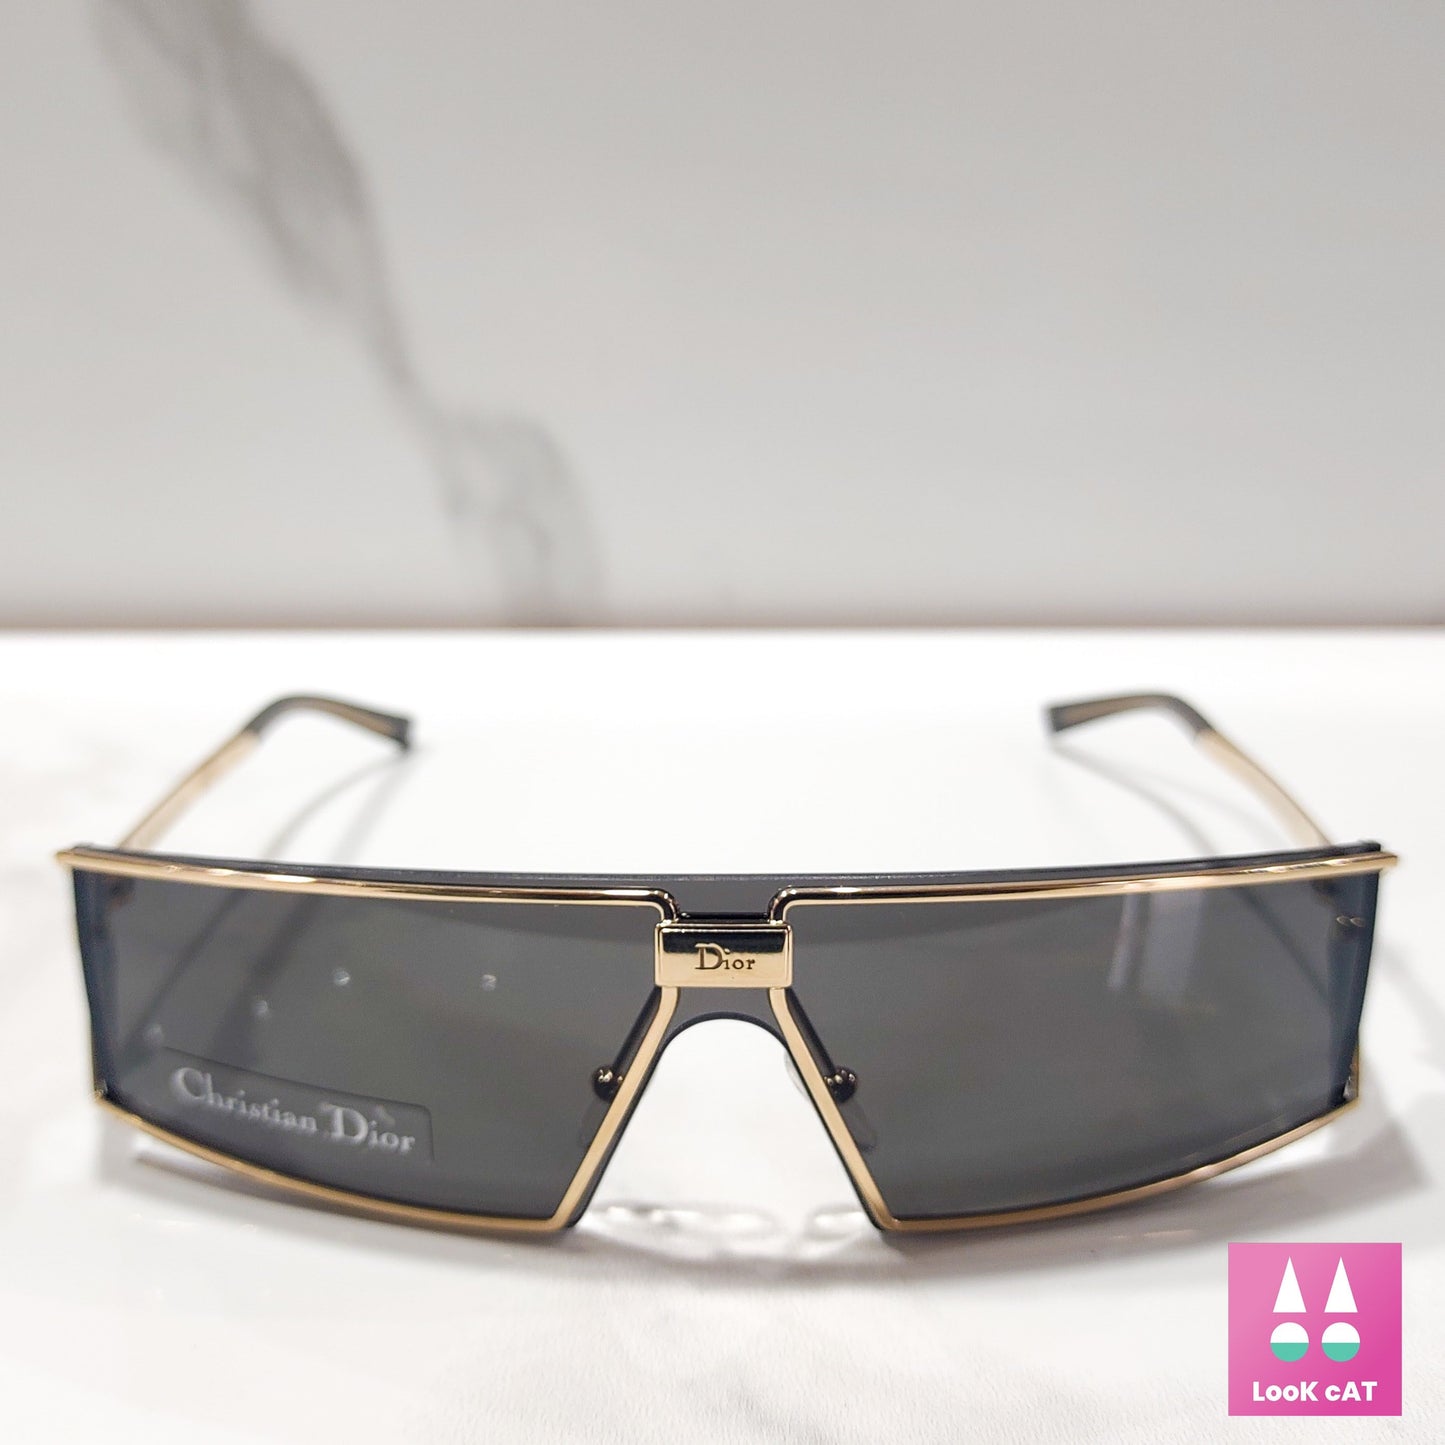 Christian Dior Troika occhiali da sole vintage occhiali gafas y2k avvolgente maschera scudo avvolgente